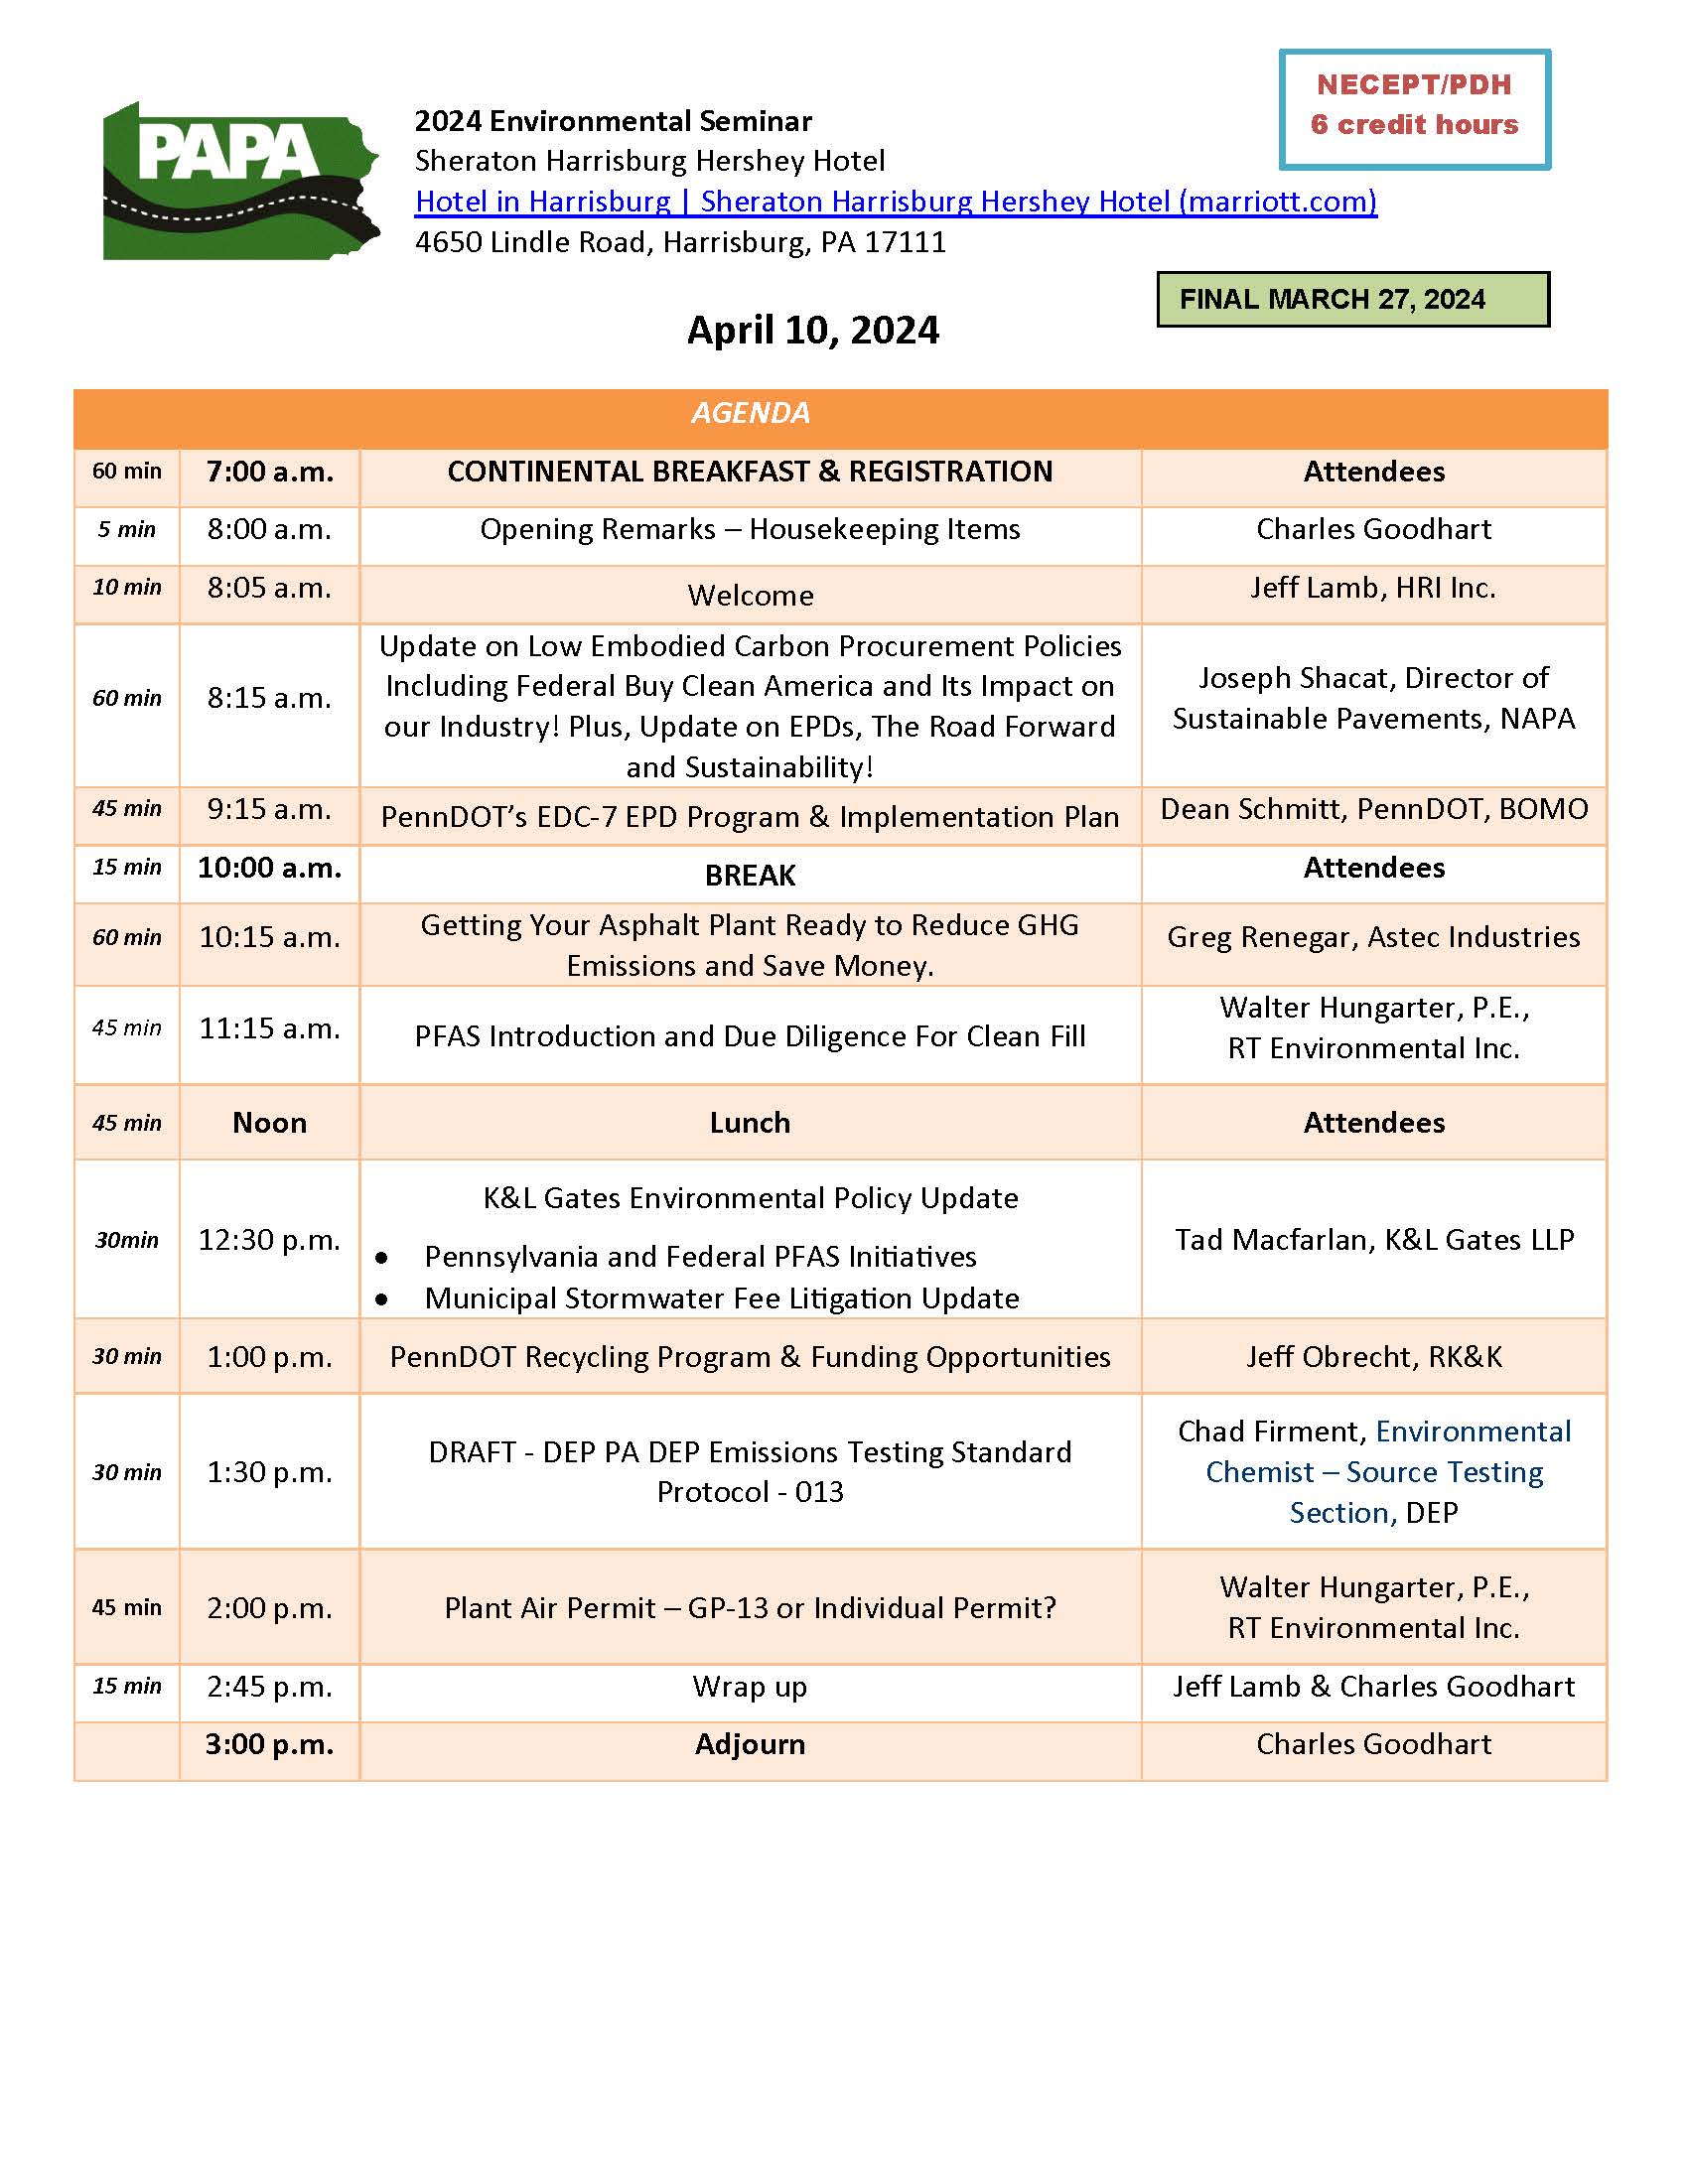 PAPA Environmental Seminar Agenda 2024 April 10 2024 FINAL 03.26.24 web